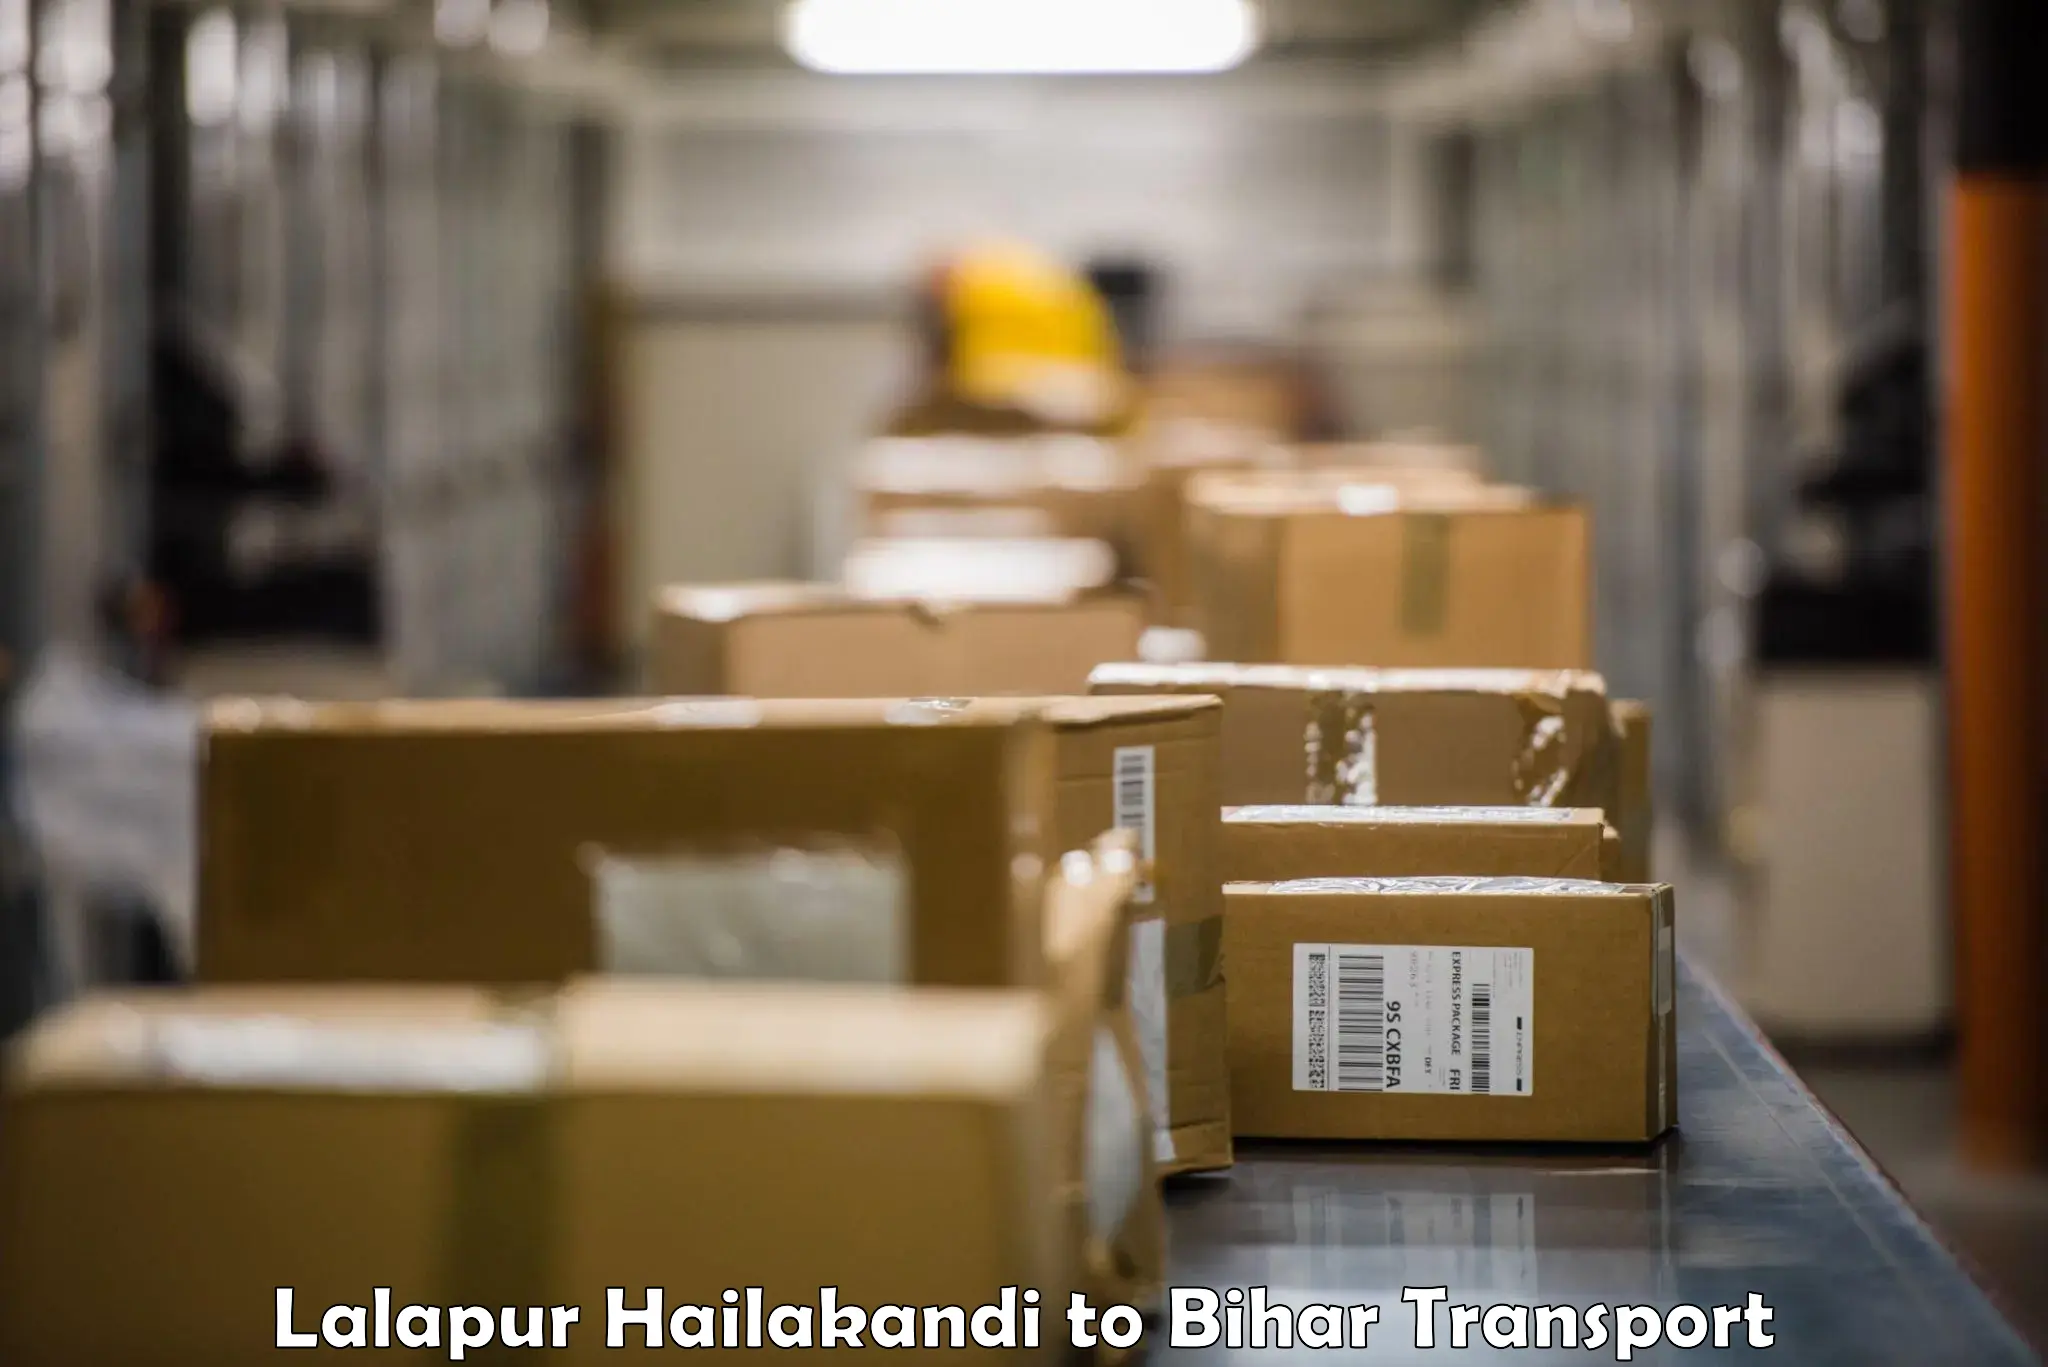 Furniture transport service Lalapur Hailakandi to Sasaram